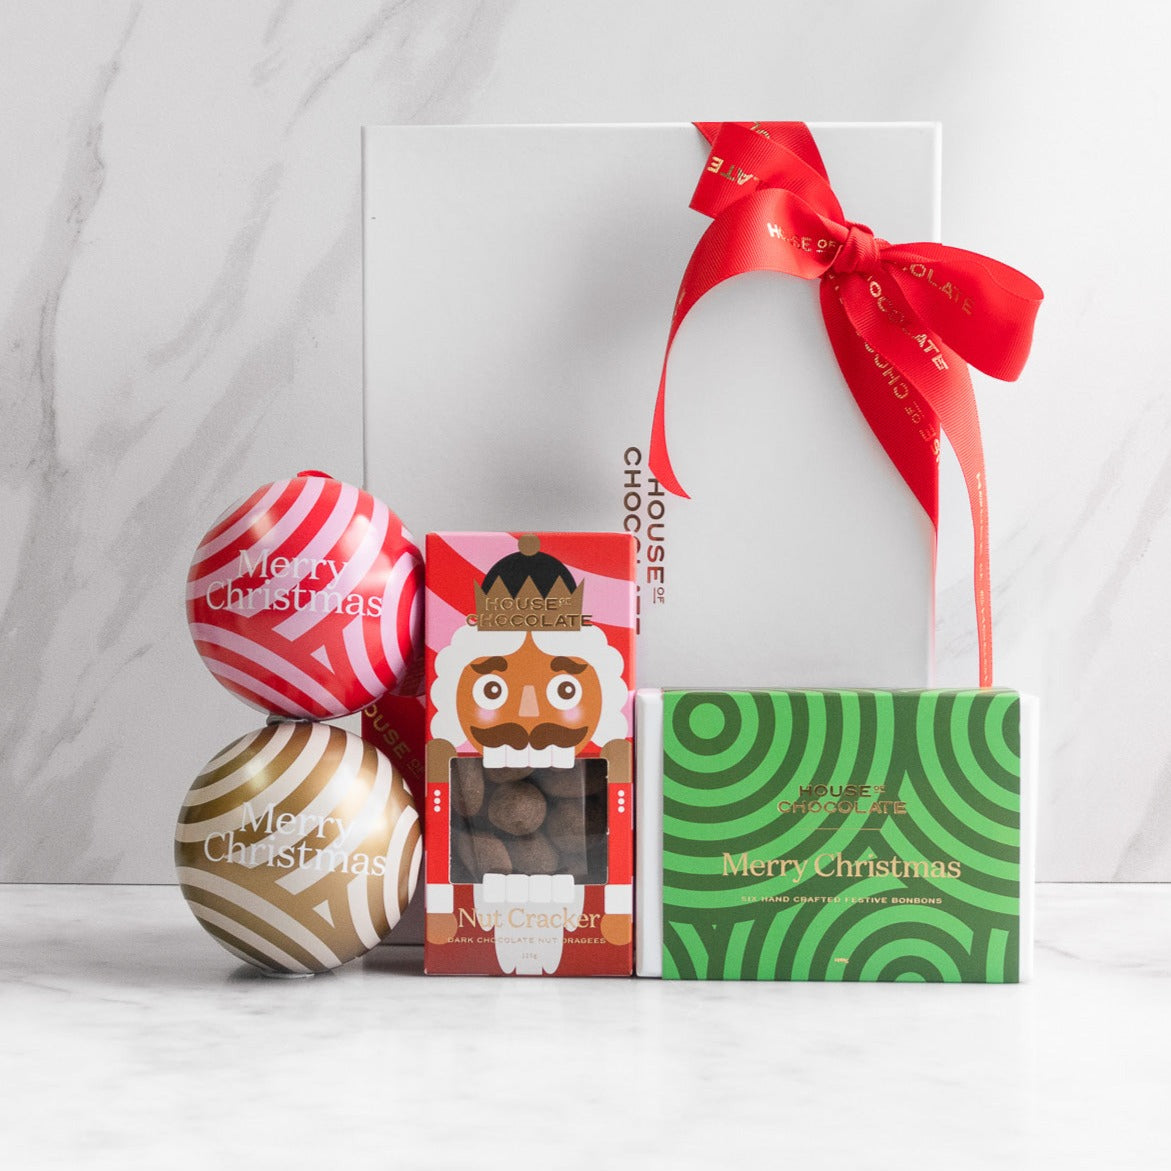 Festive Christmas Chocolate Gift Box